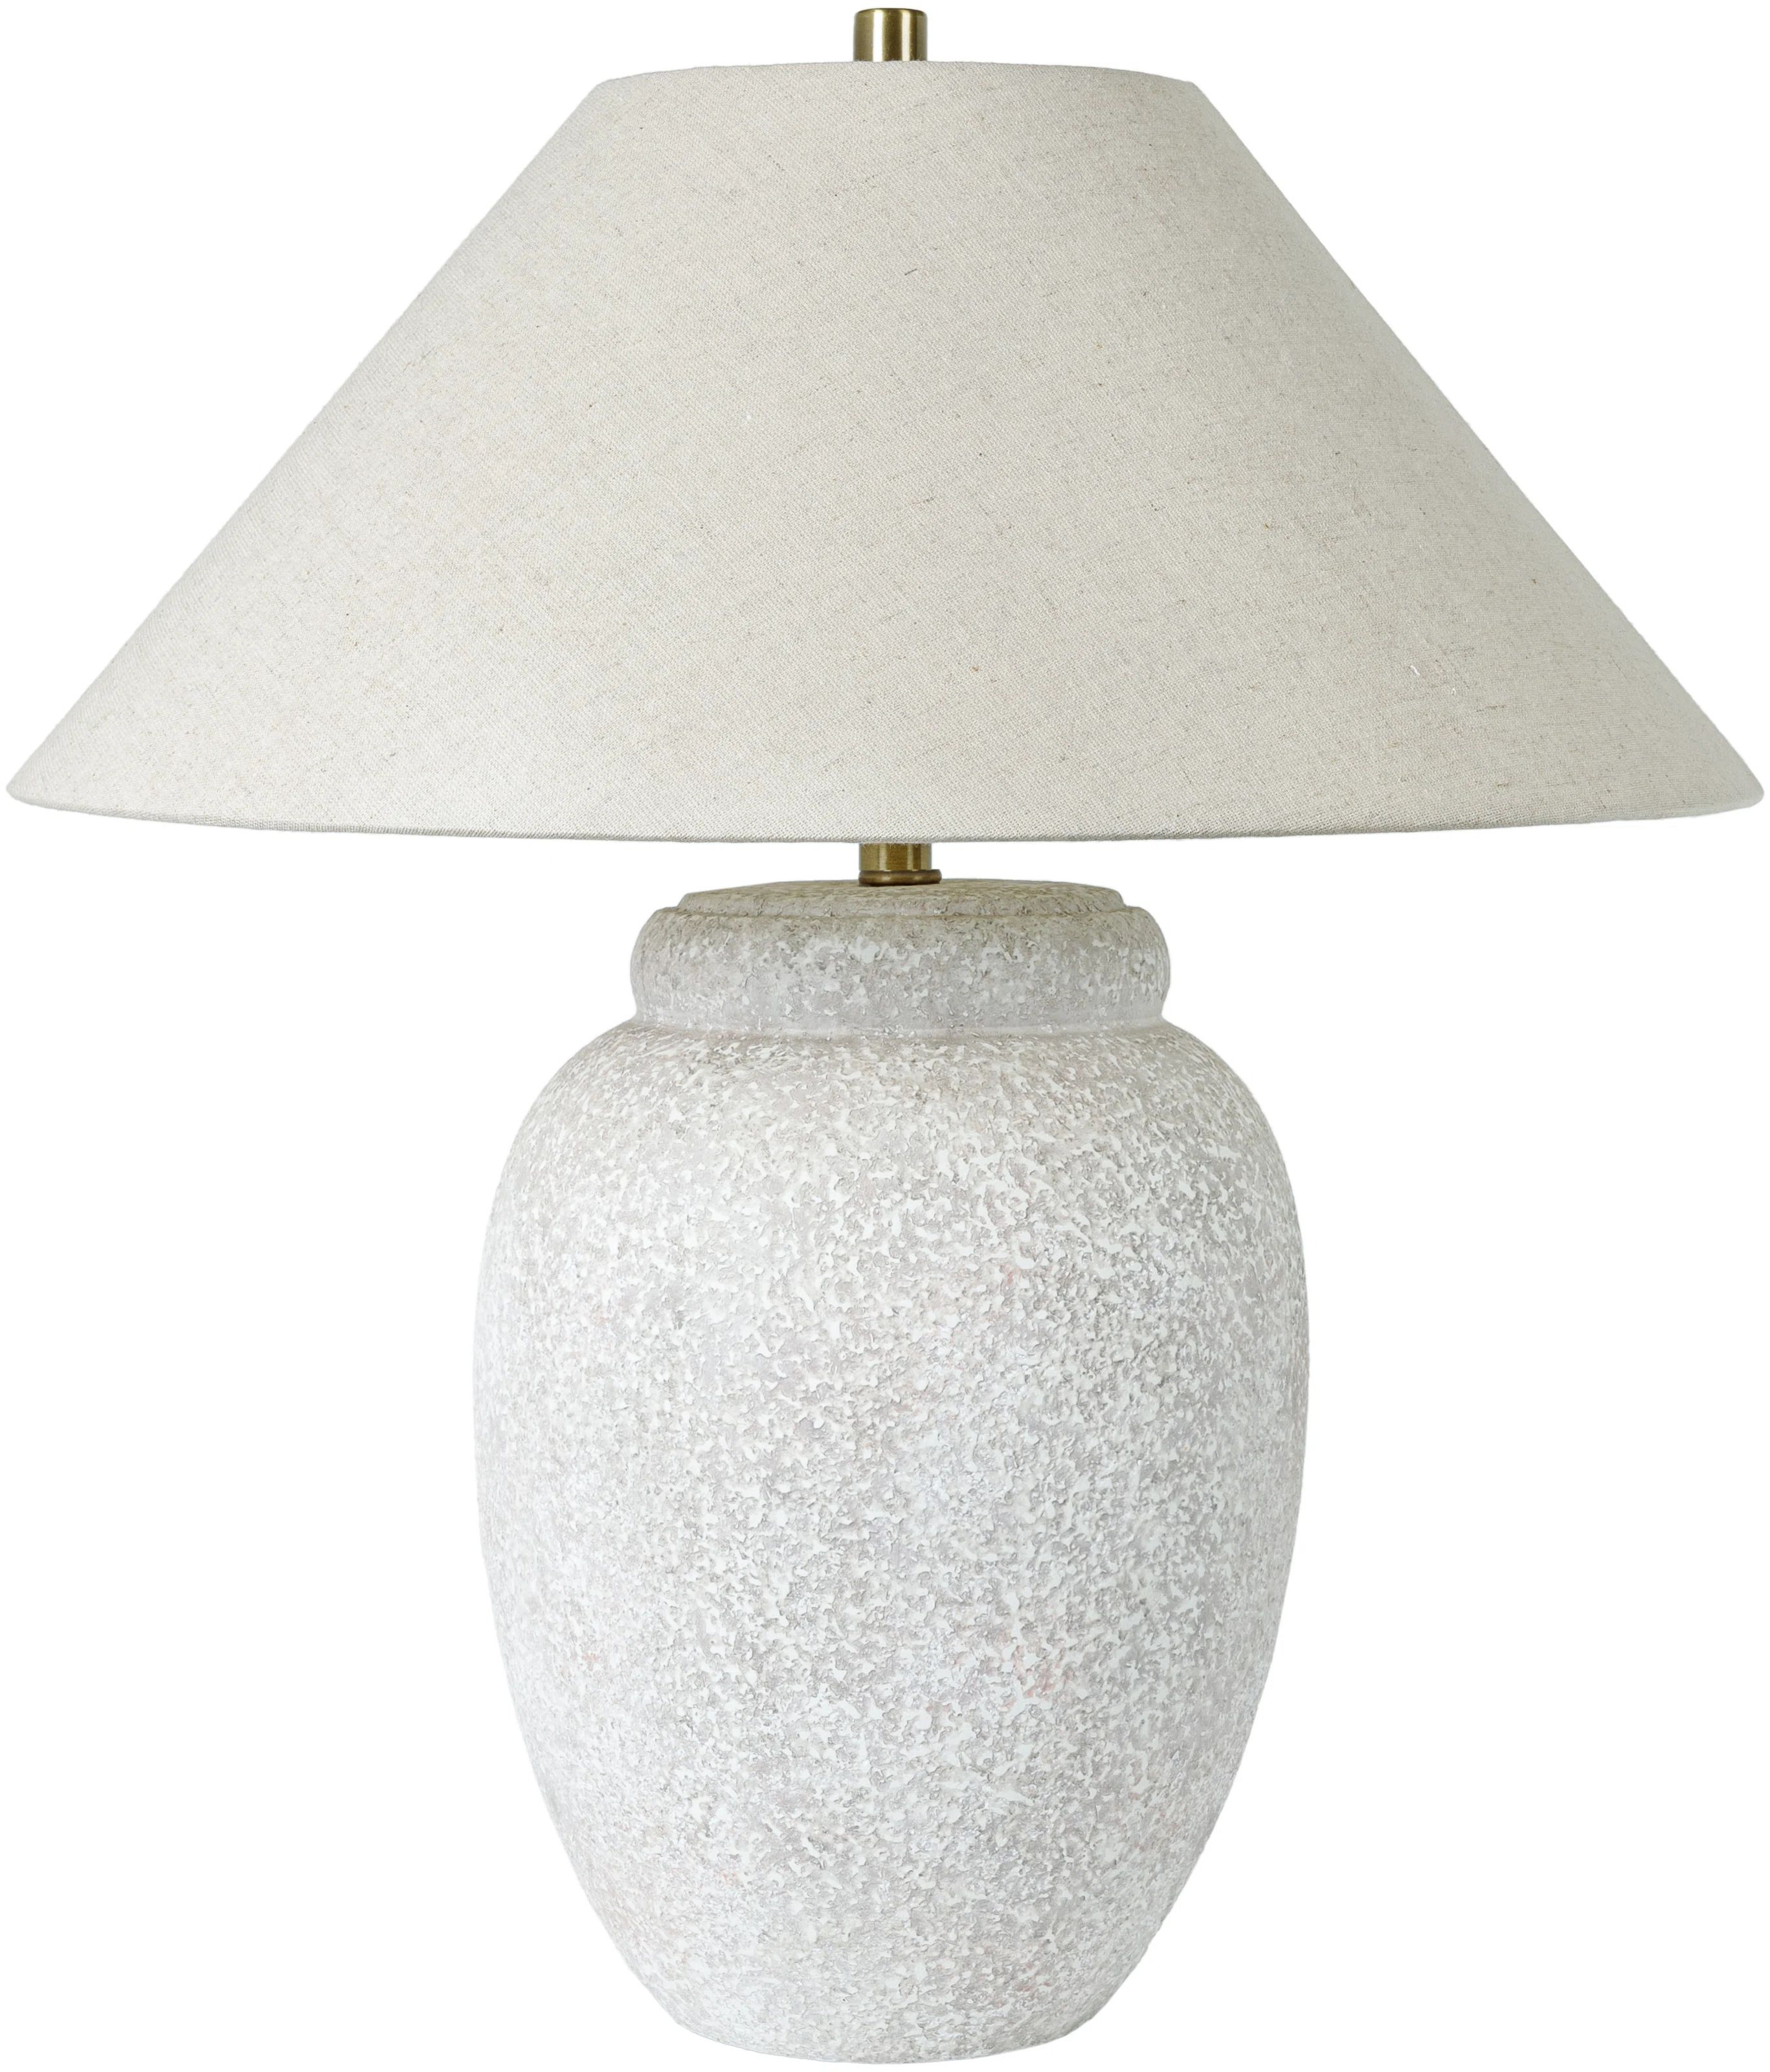 Vervino Ceramic Lamp | Wayfair North America